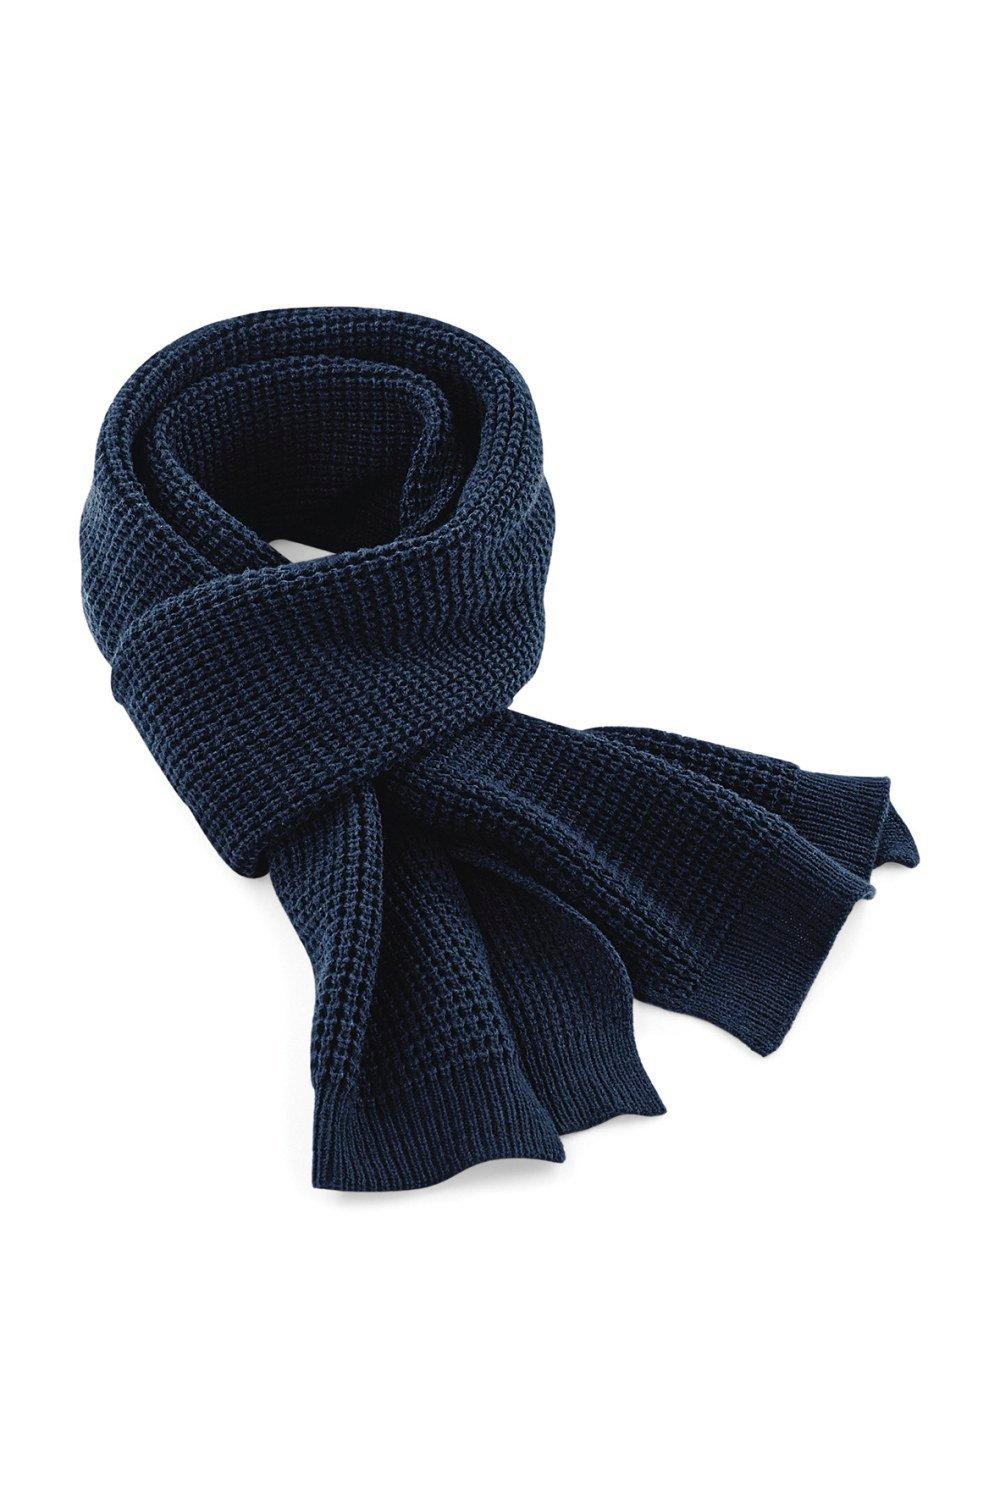 Классический зимний шарф вафельной вязки Beechfield, темно-синий